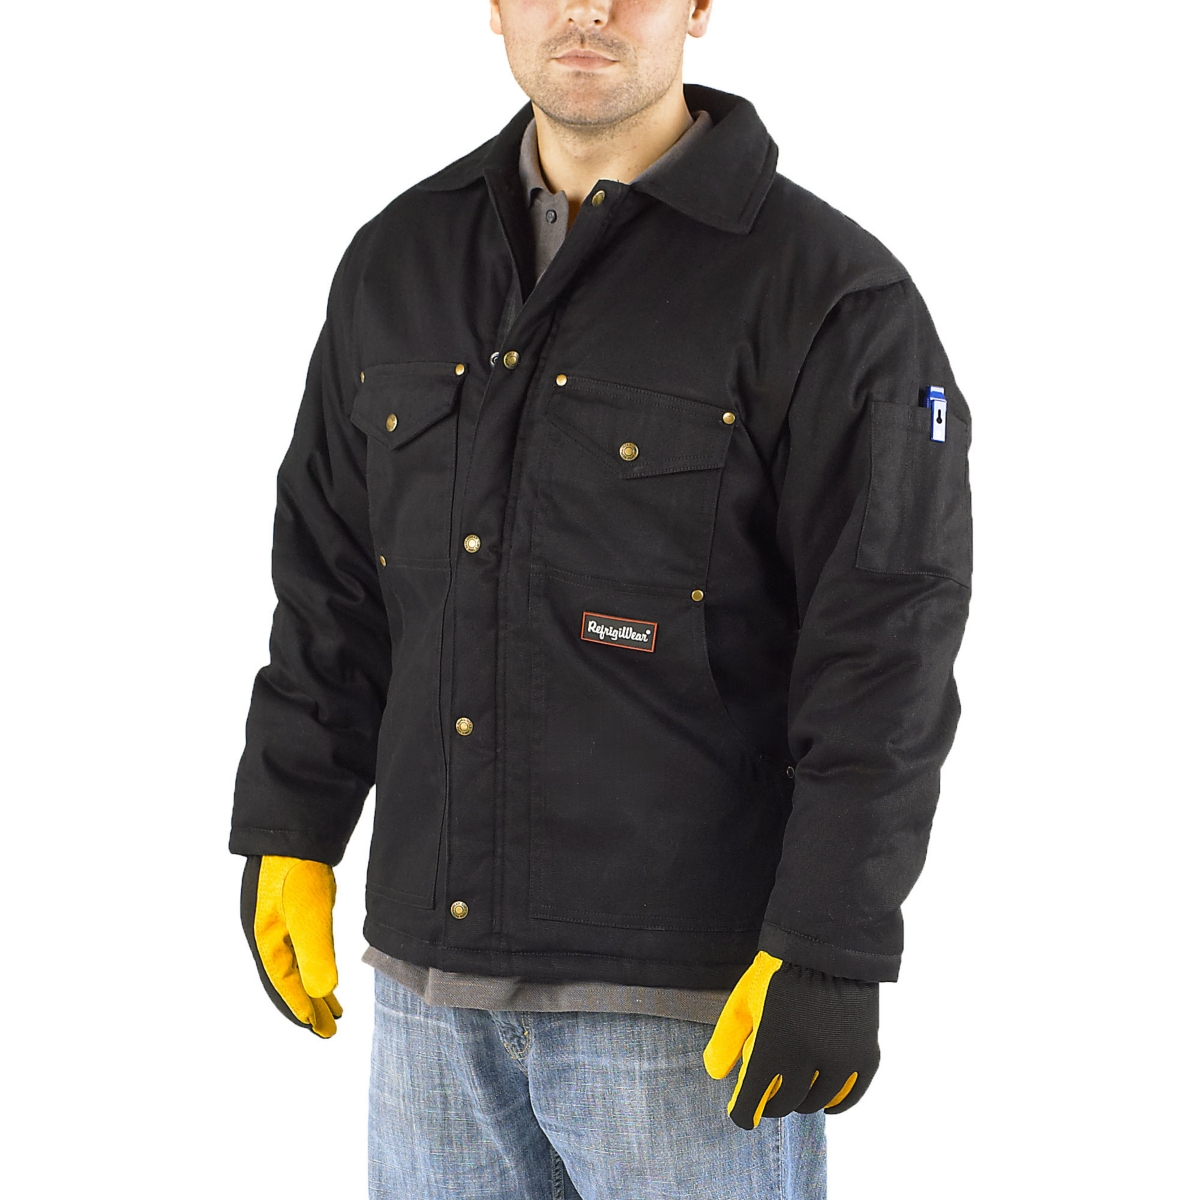 Men's ComfortGuard Insulated Workwear Utility Jacket Water-Resistant - Black